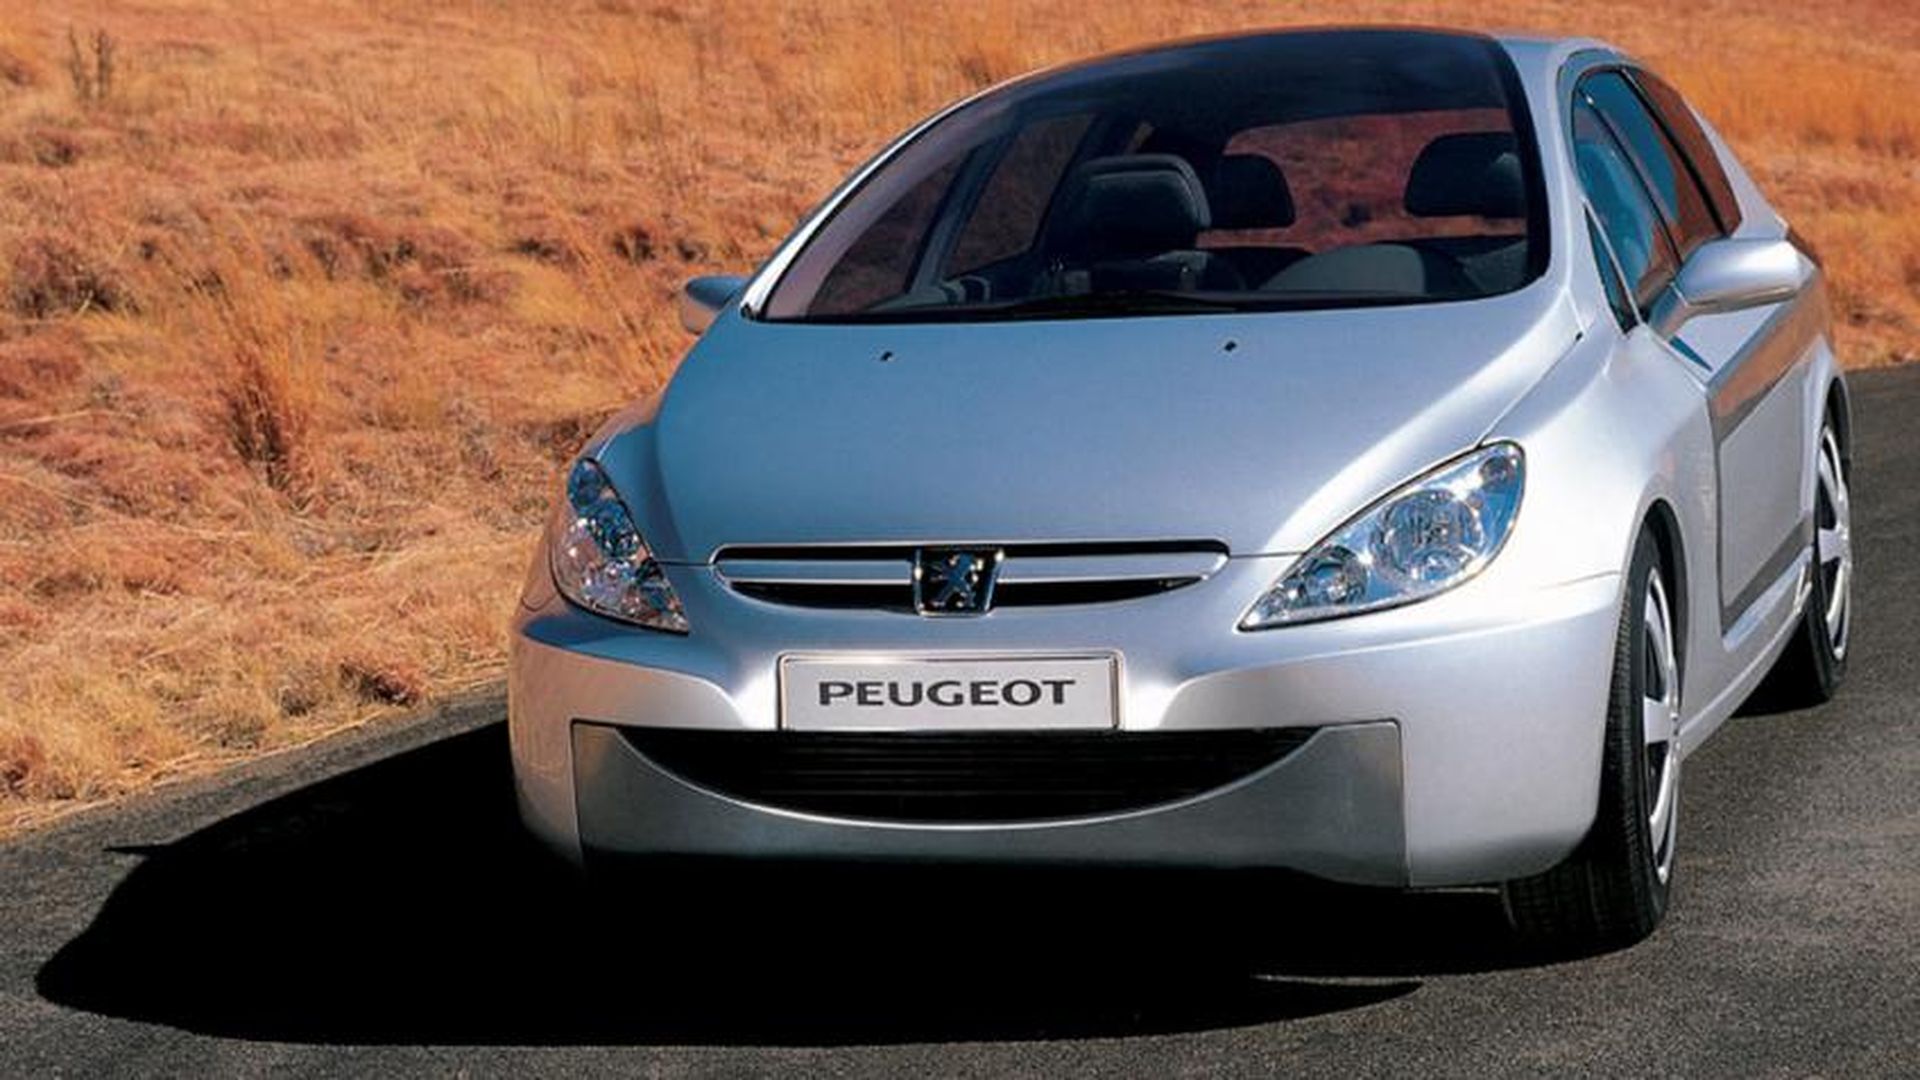 Peugeot Promethee concept (2000)